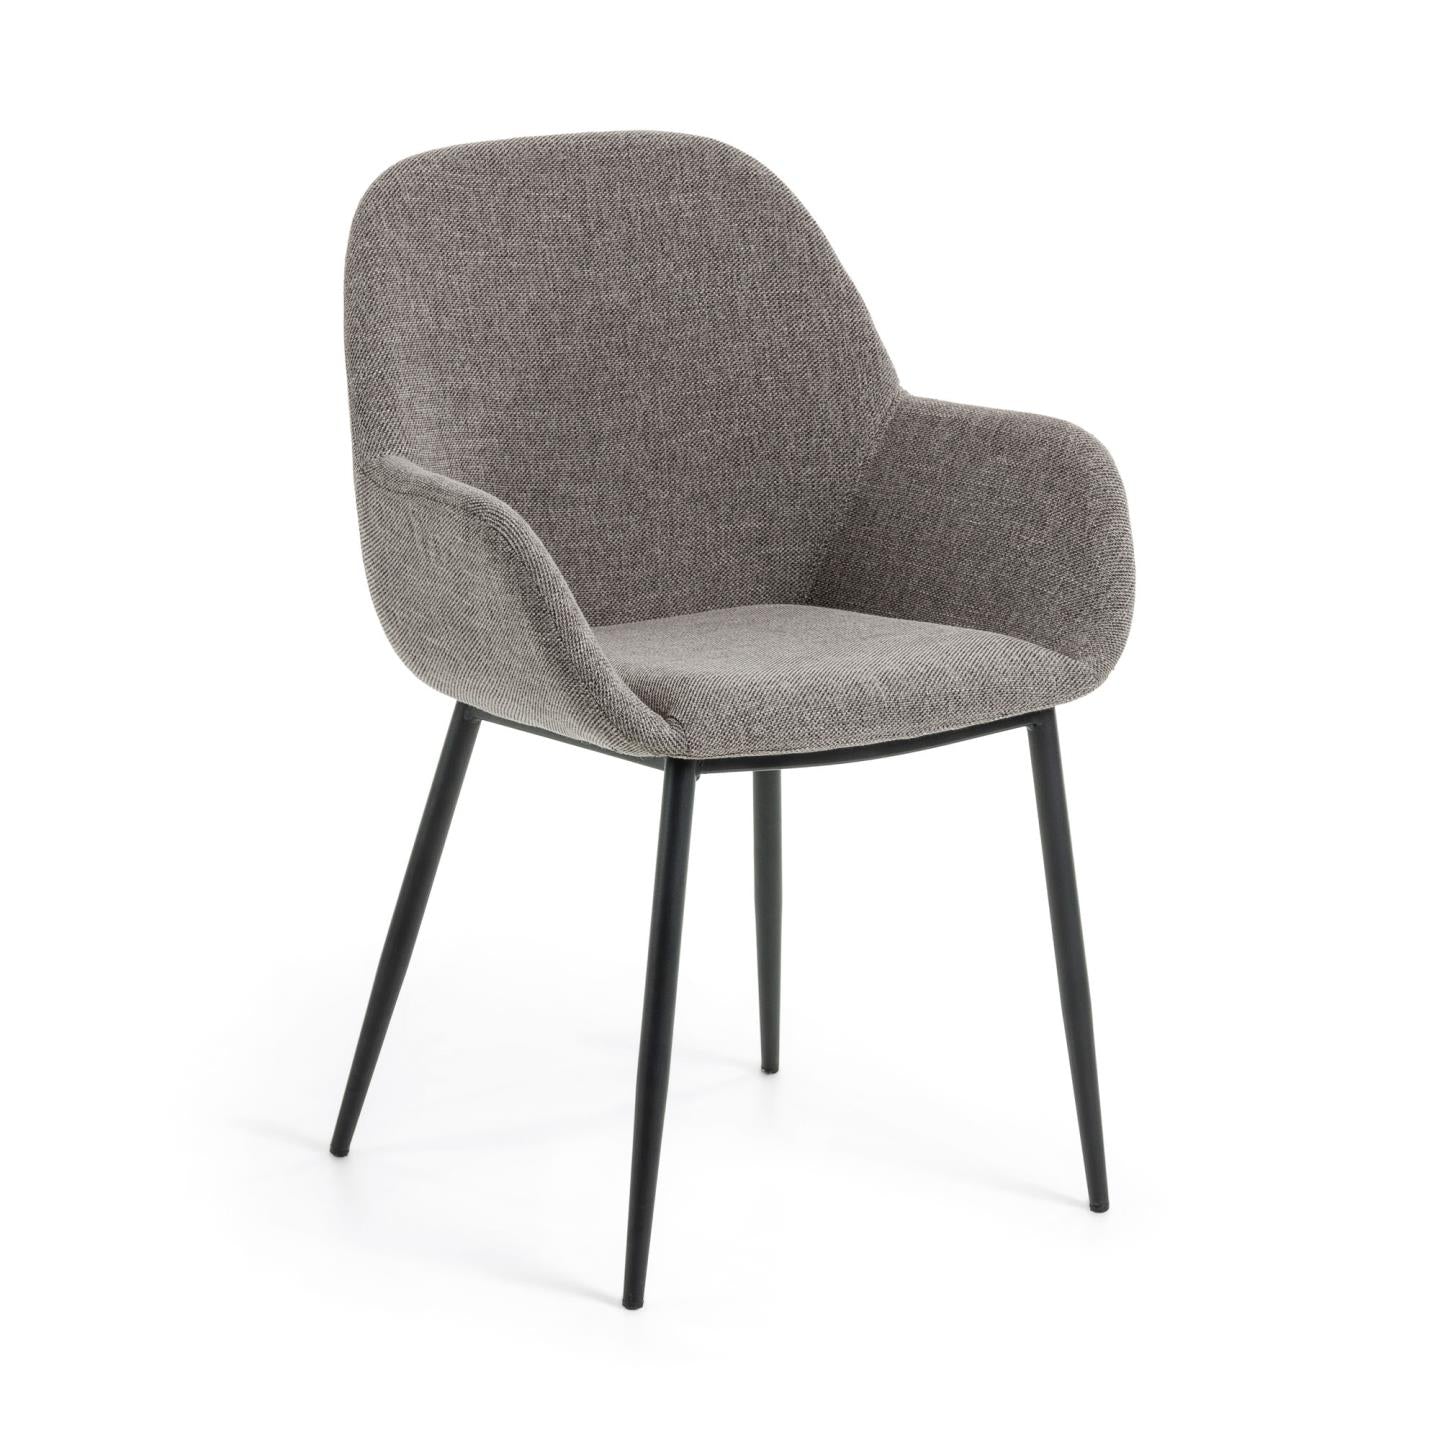 Konna light grey chair